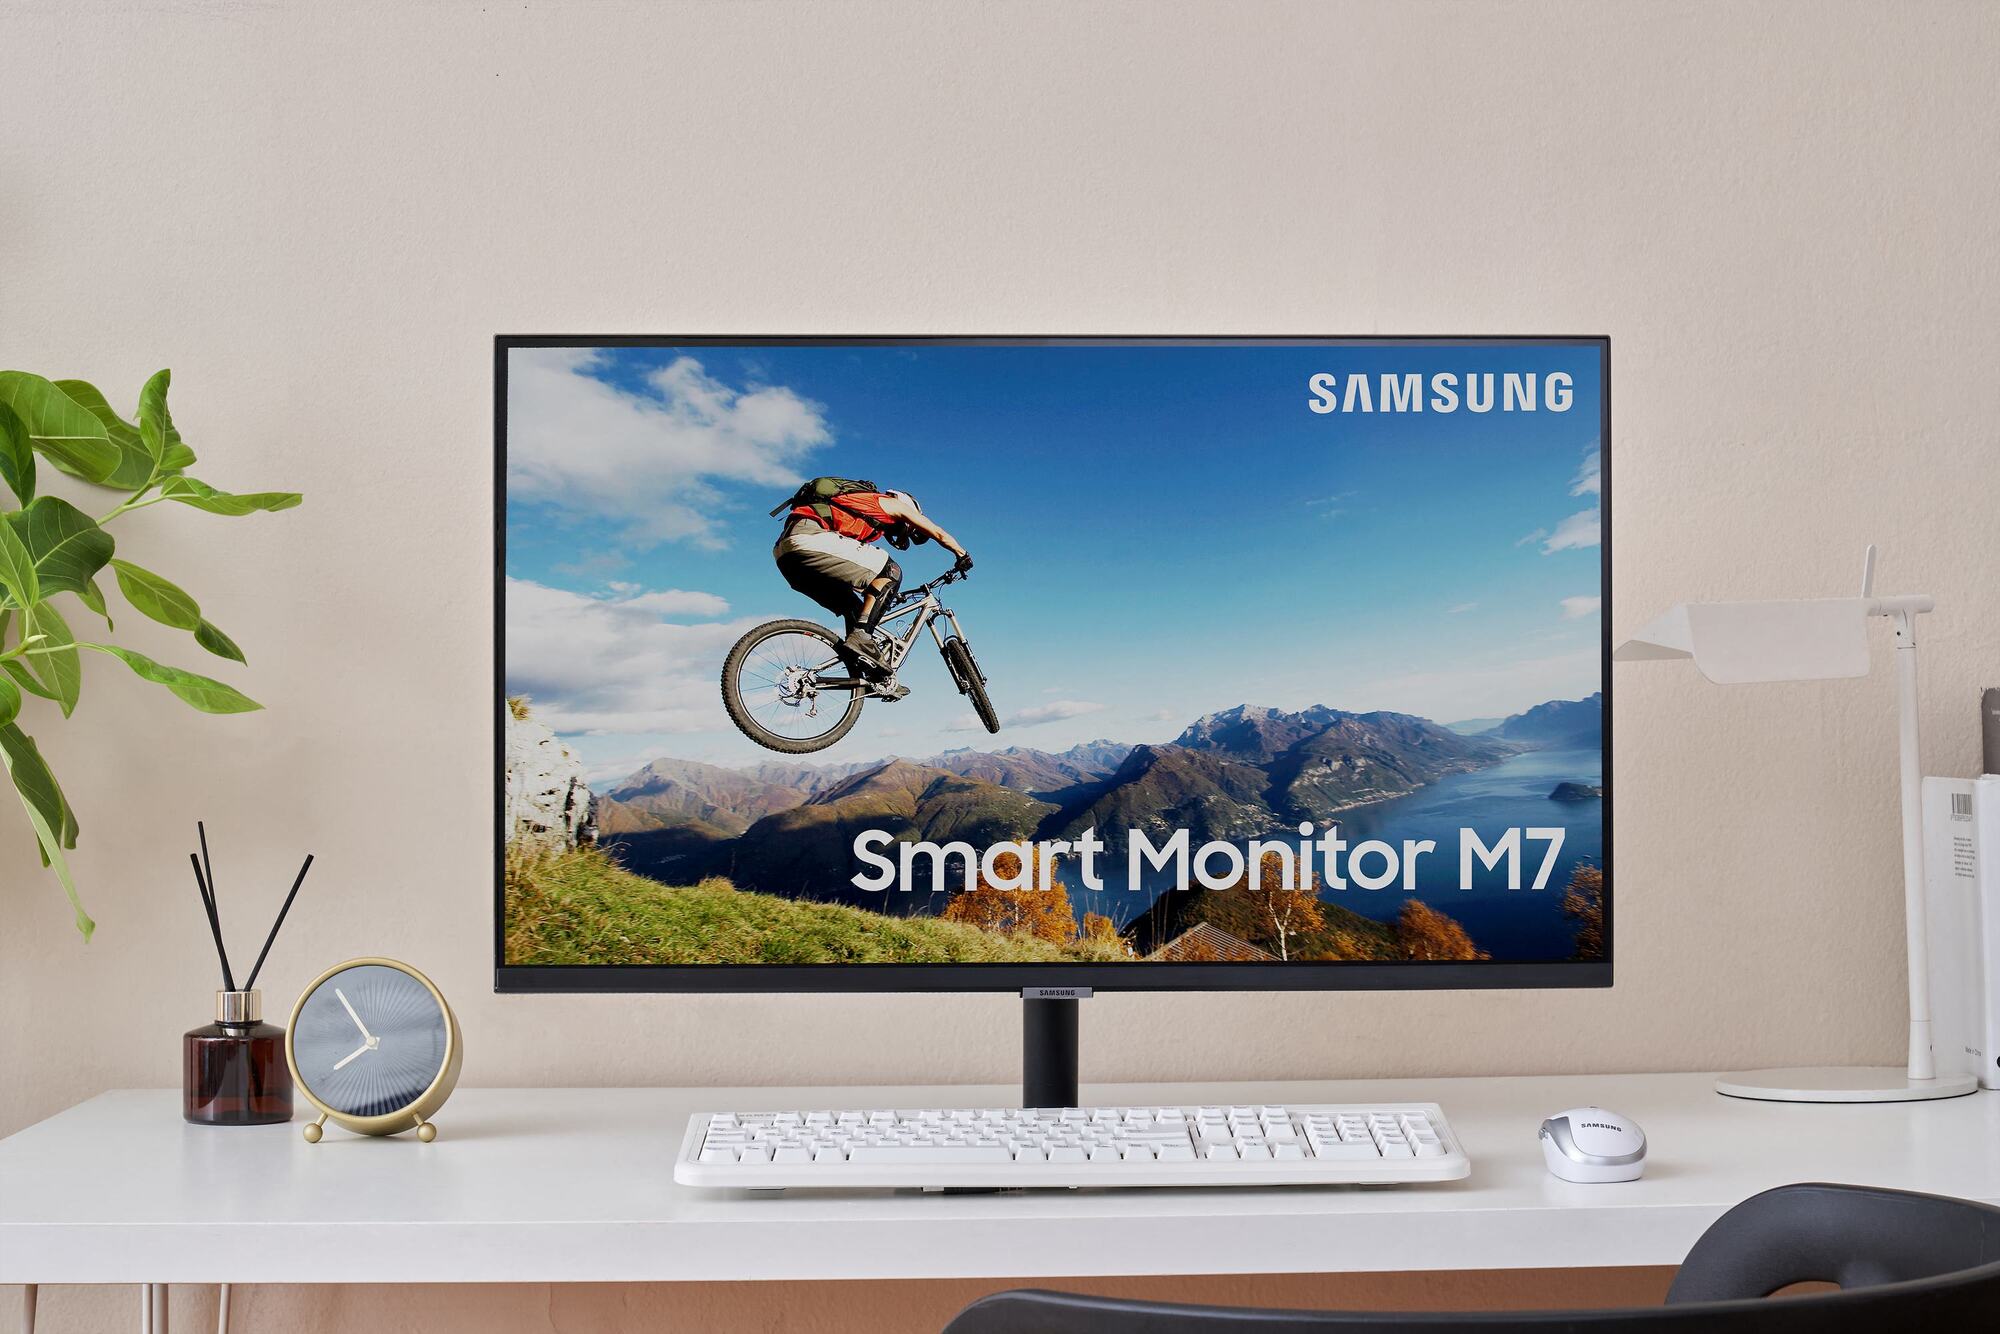 Samsung Announces New Lifestyle Smart Monitor Smart-Monitor-M7-M5.jpg